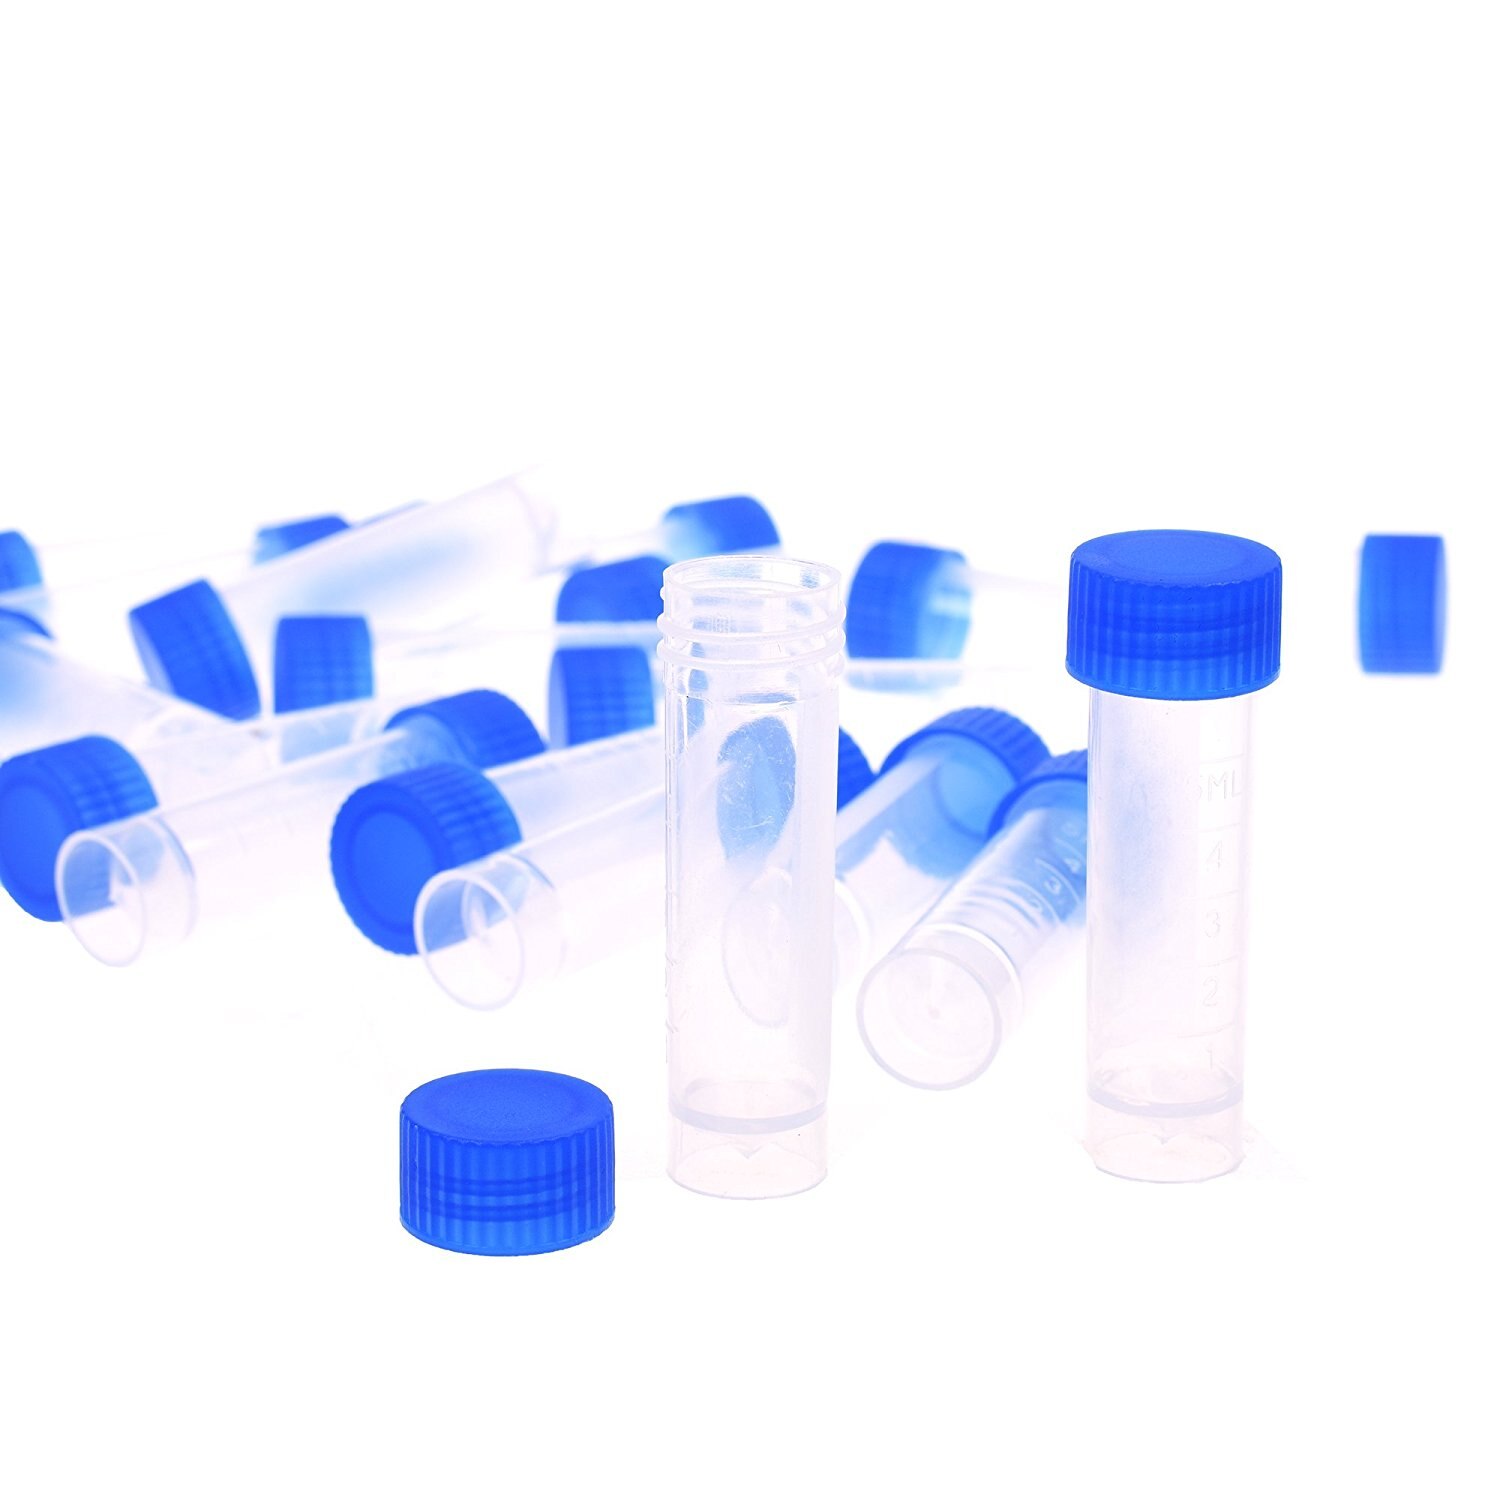 50 STKS Afstuderen 5 ml Centrifugebuis Plastic Flessen met schroefdop Transparant container Kan wetgeving flesjes